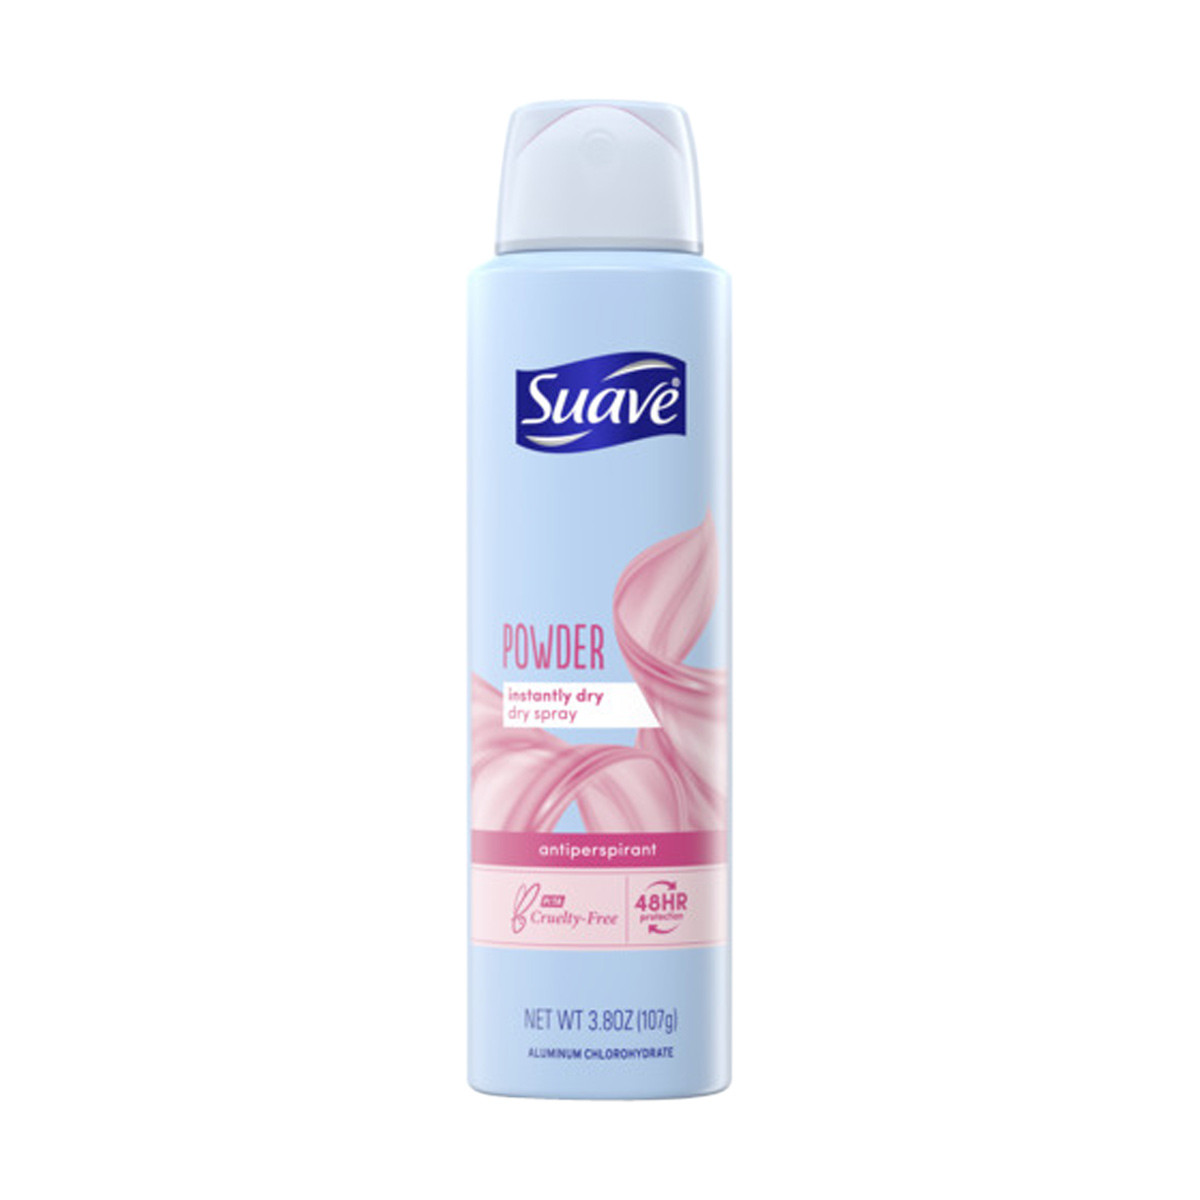 Suave Dry Spray Antiperspirant Deodorant, Powder Spray, 3.8 oz